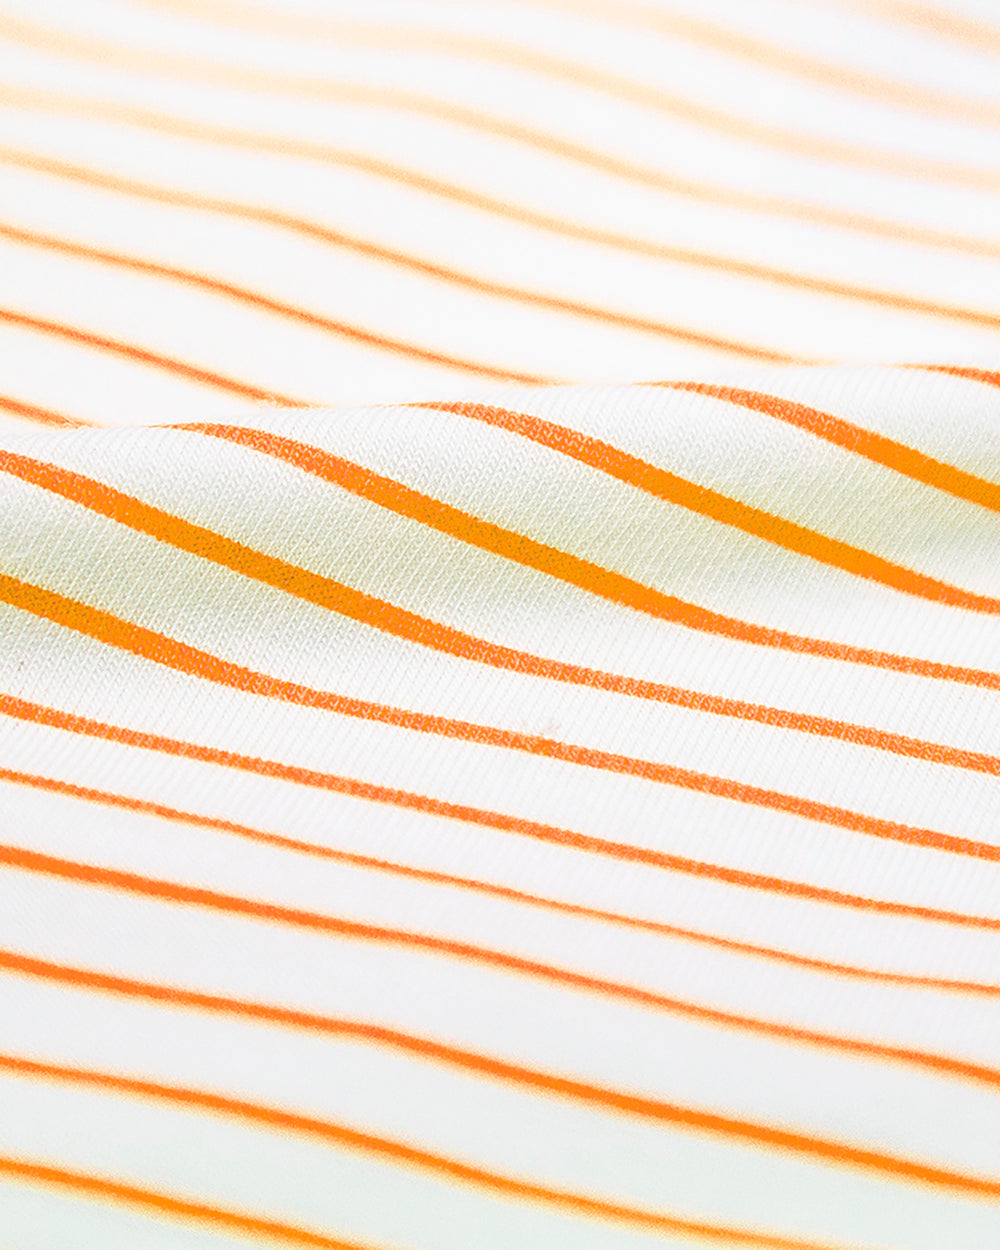 The Original Knicker - Orange Candy Stripe Stripe & Stare